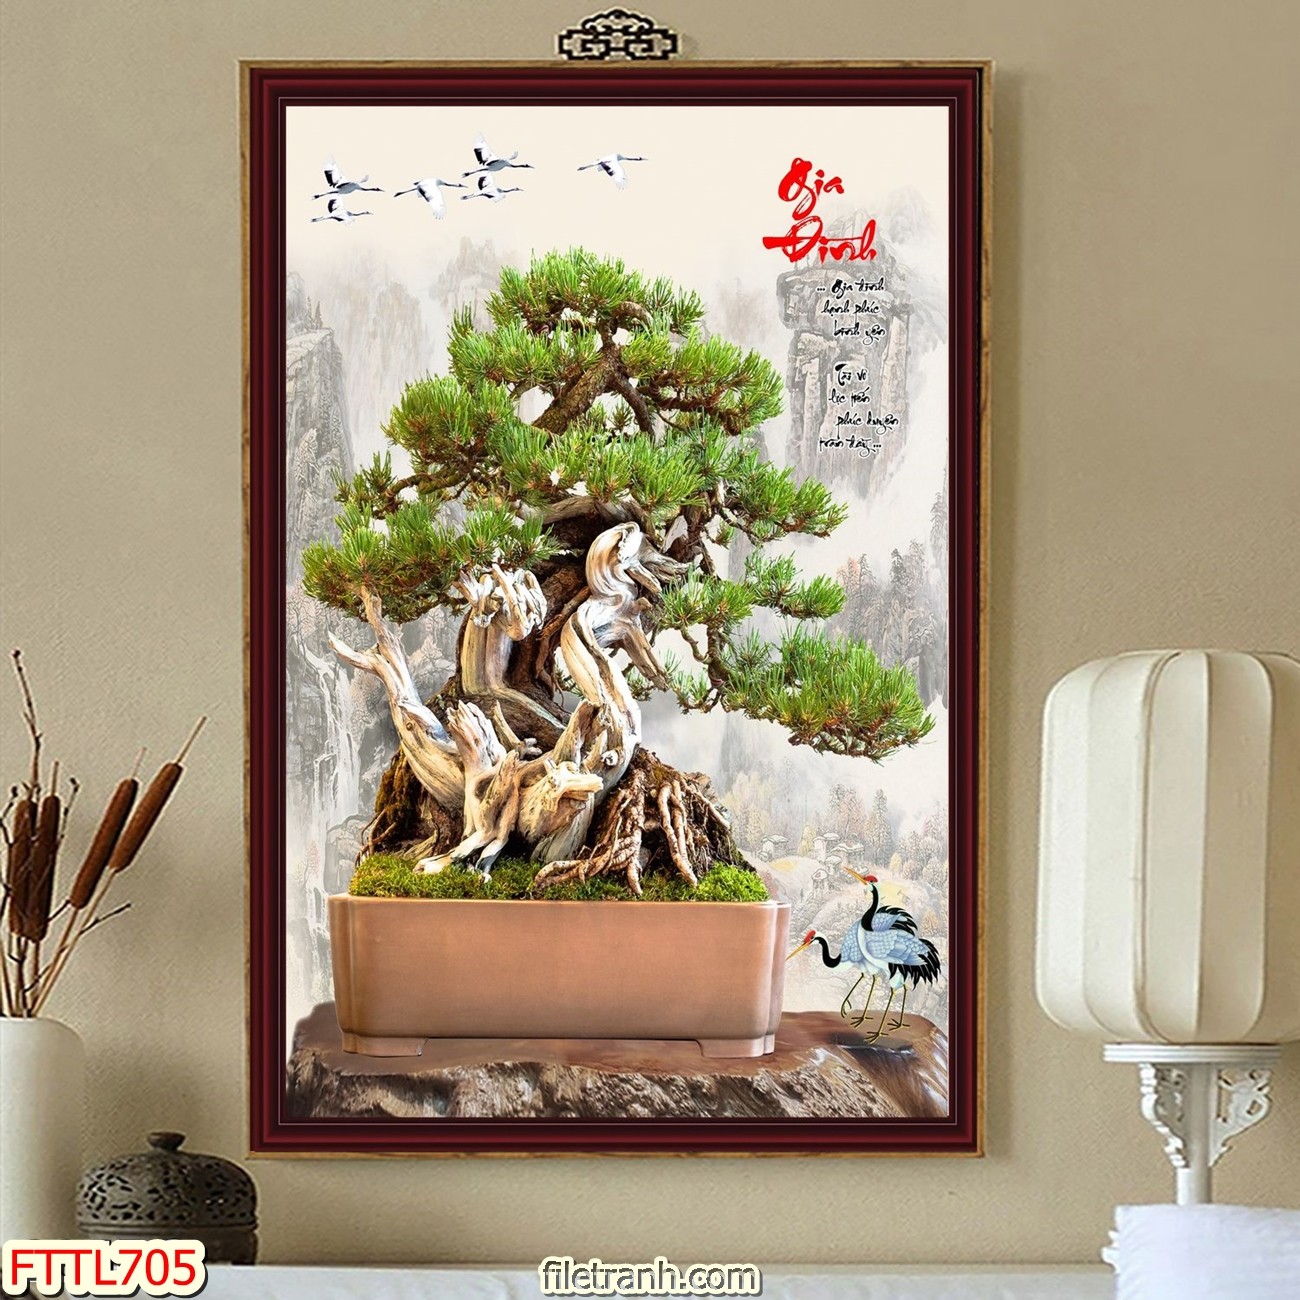 https://filetranh.com/file-tranh-chau-mai-bonsai/file-tranh-chau-mai-bonsai-fttl705.html